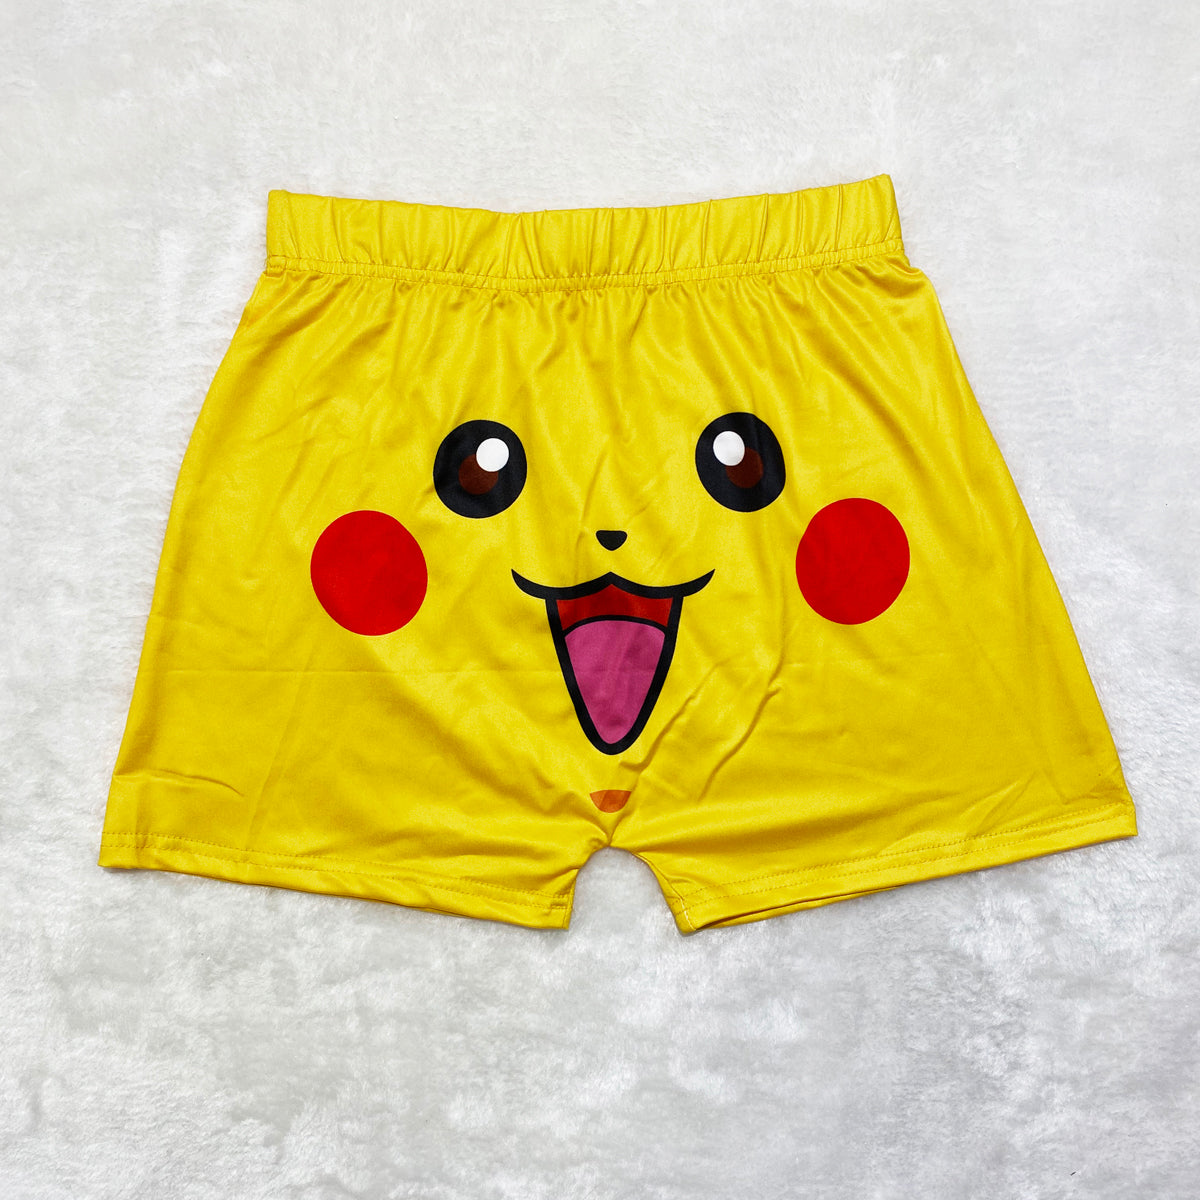 “Pikachu” Shorts